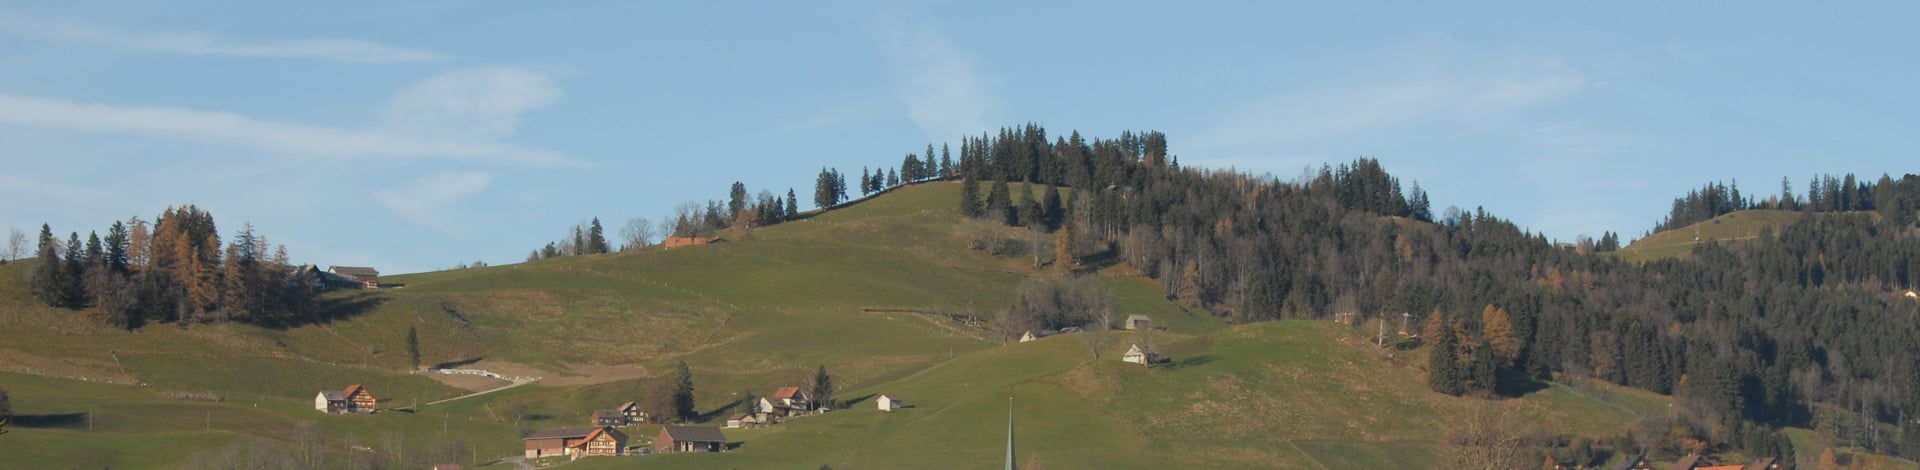 Hügel in Appenzell Ausserrhoden